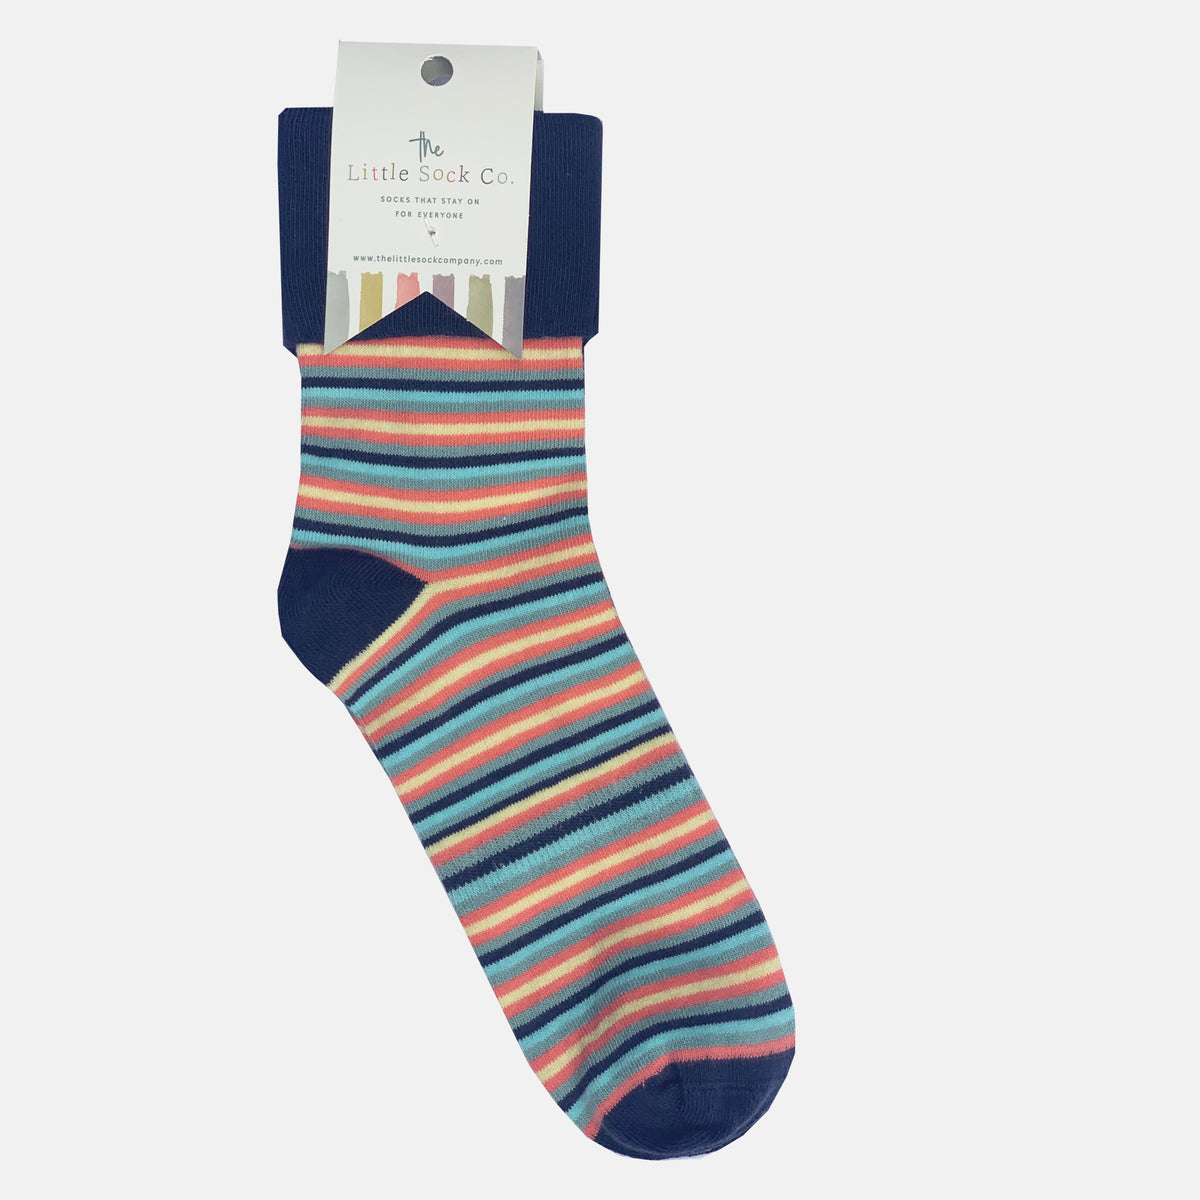 Adults Mini Me Matching Socks in Smarty Stripe